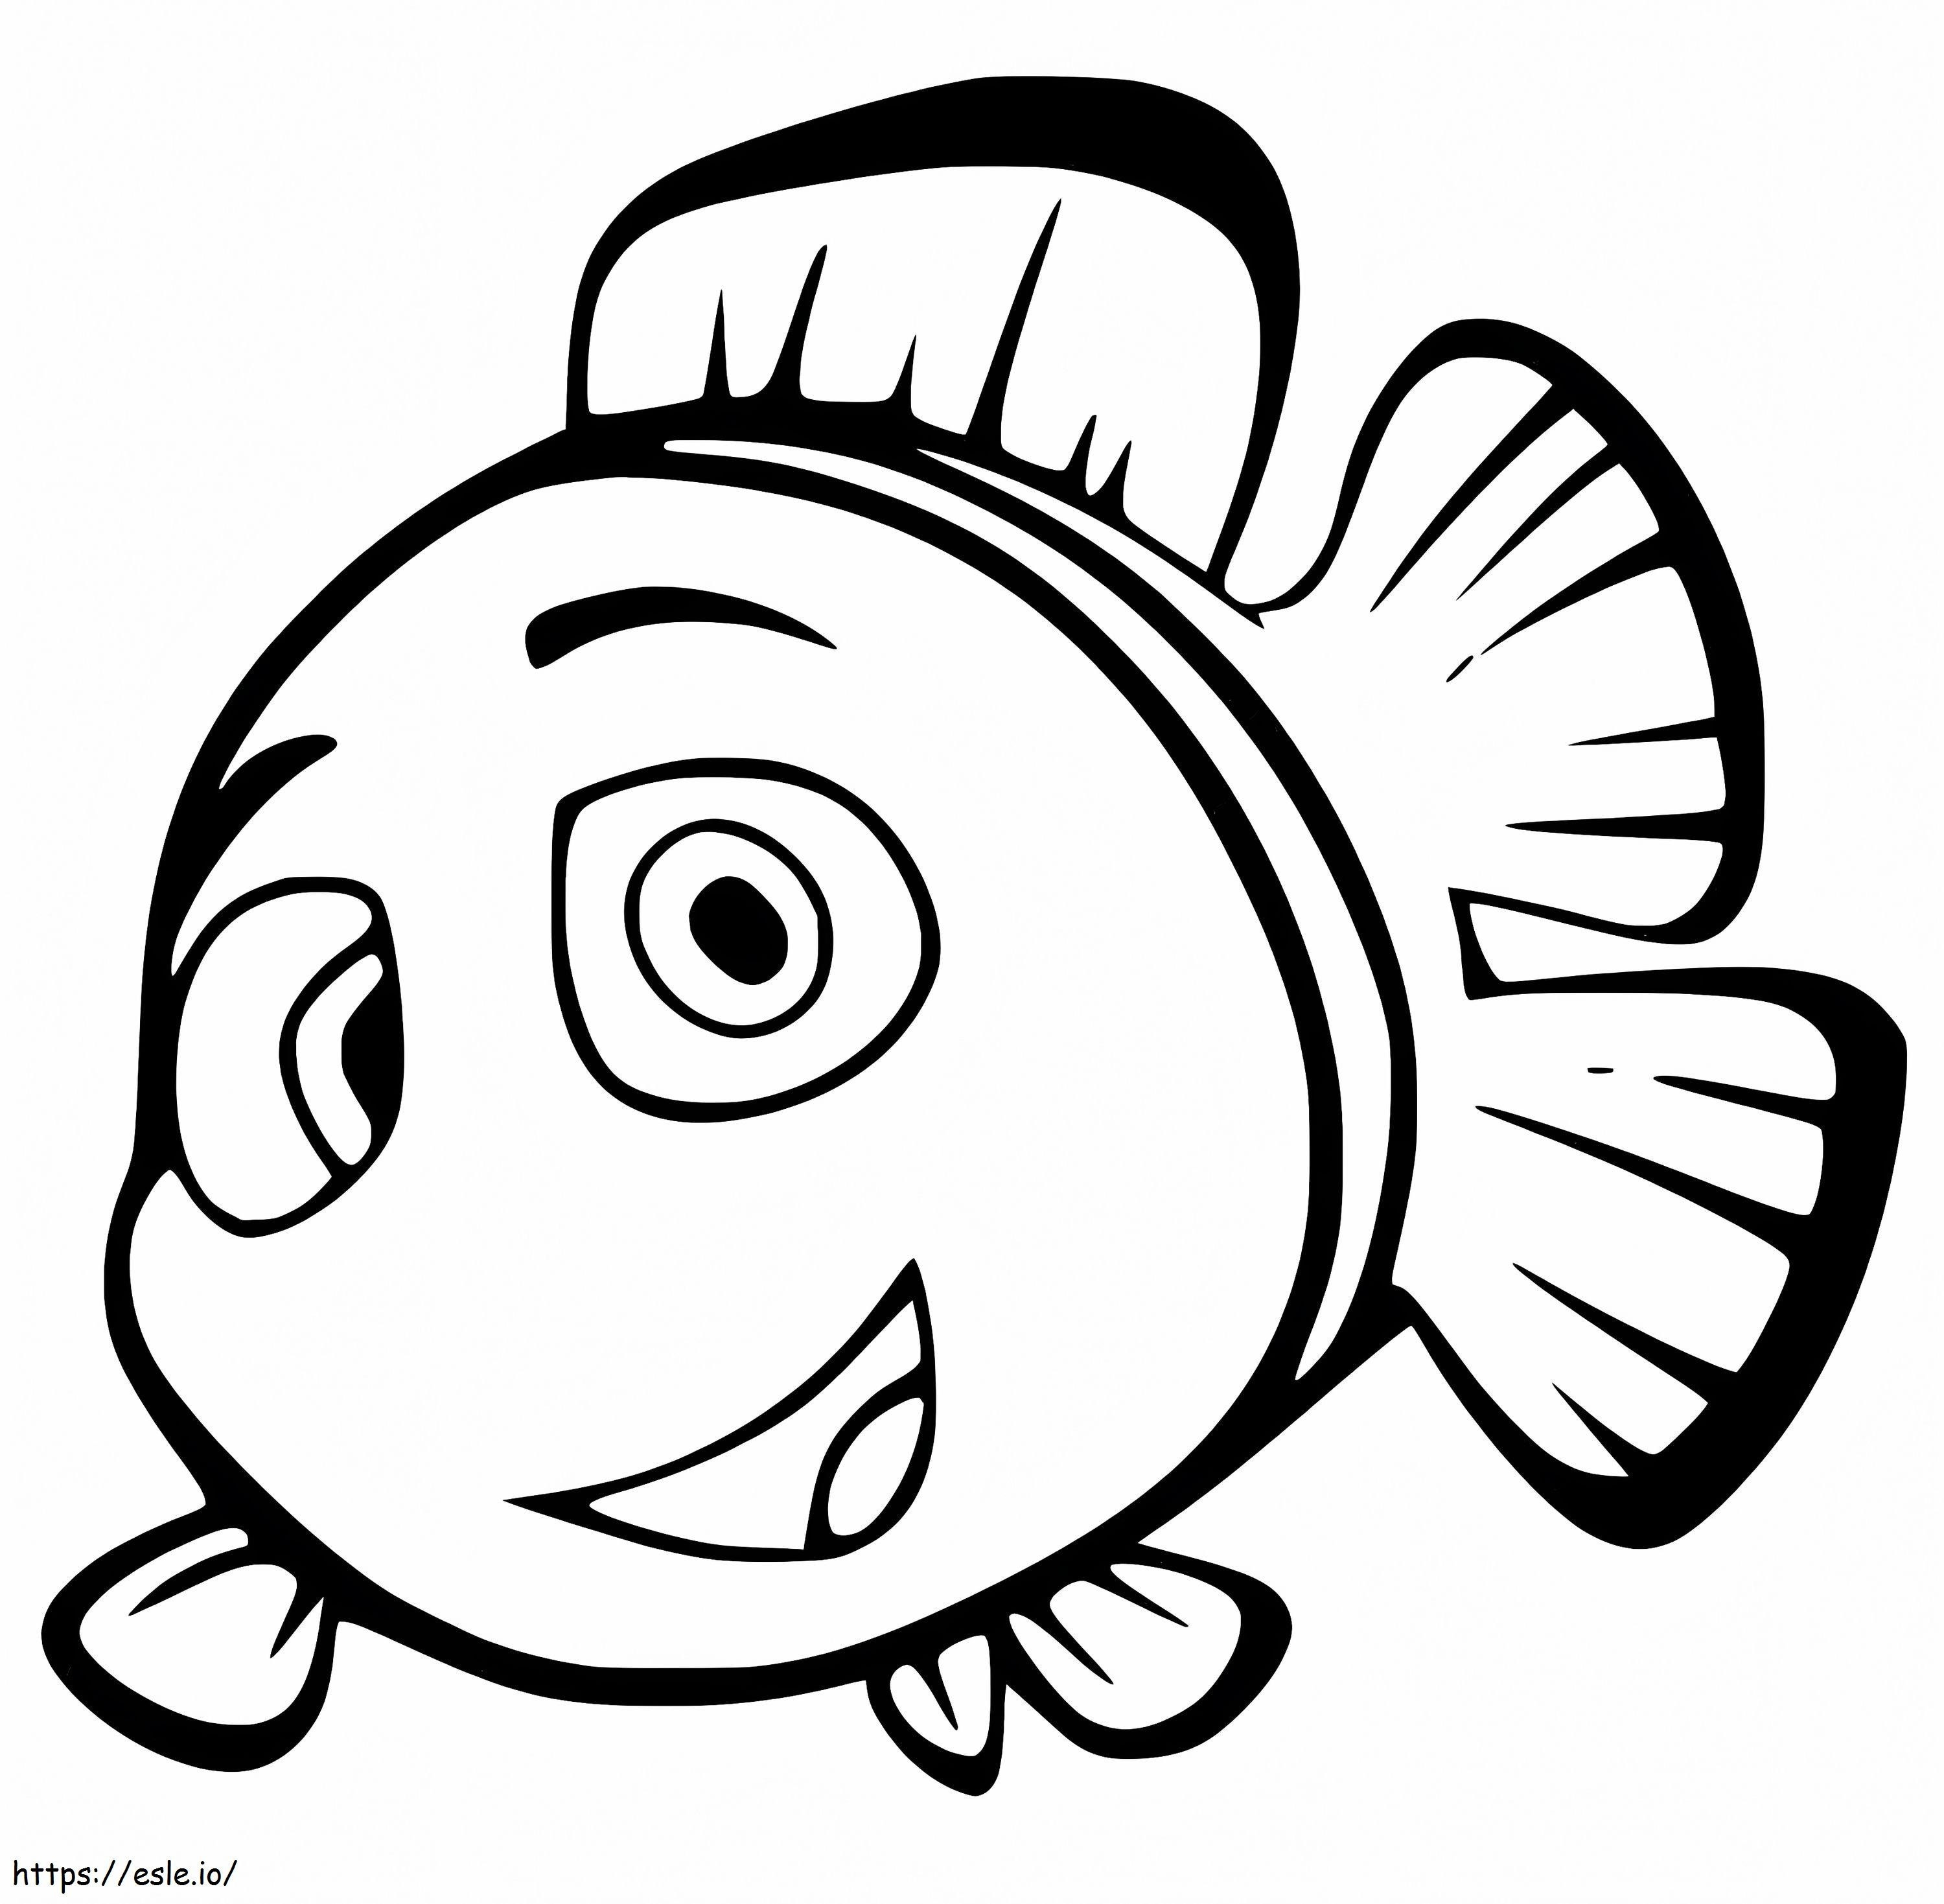 Cartoon-Clownfisch ausmalbilder